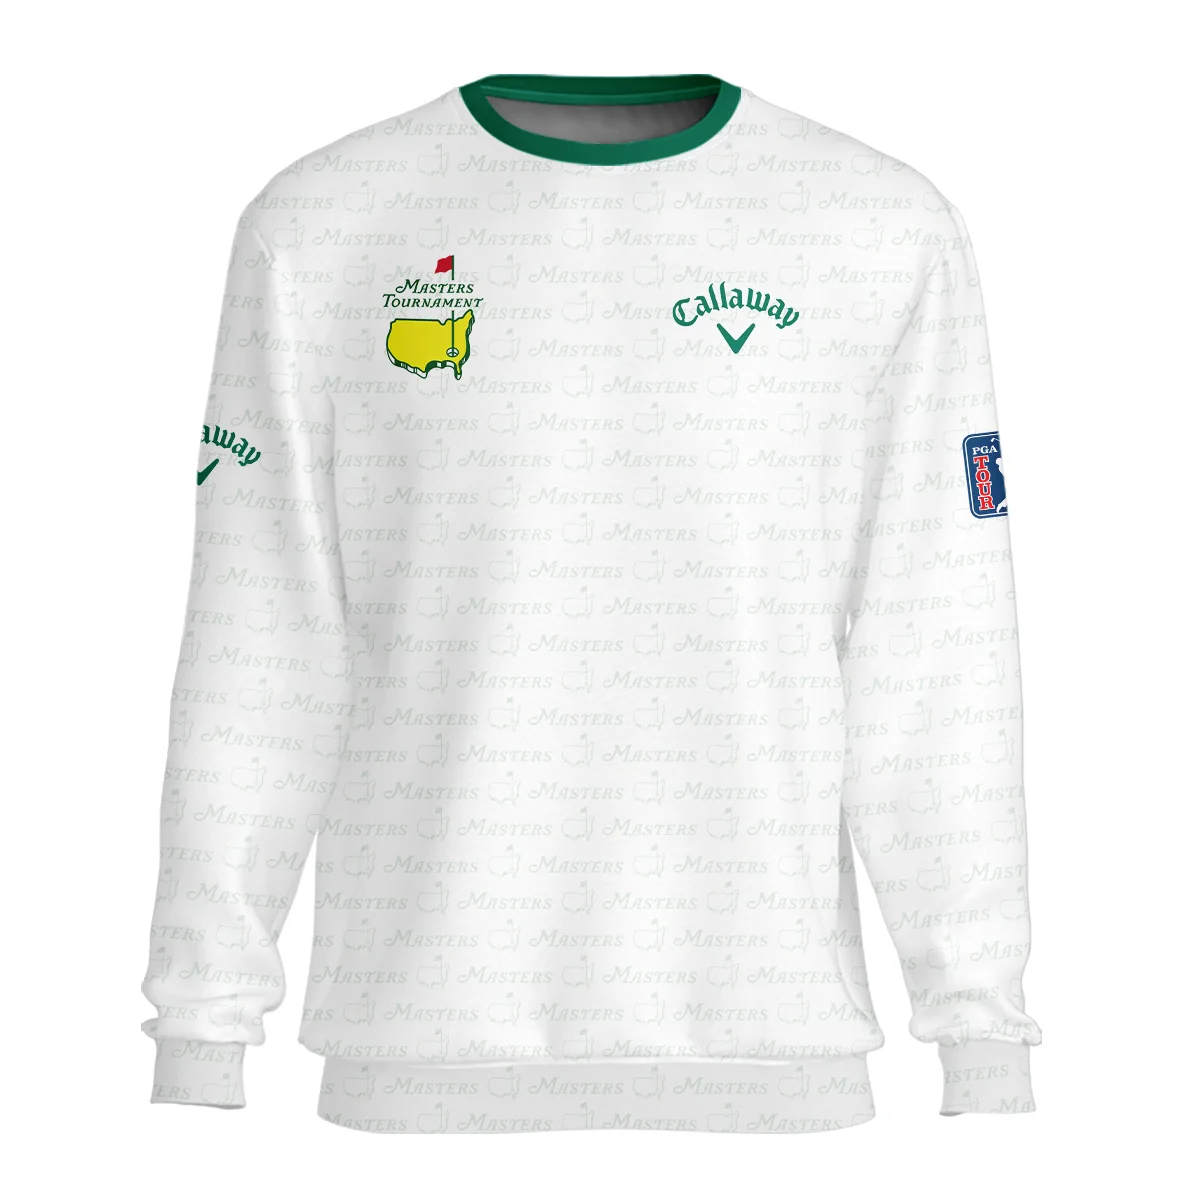 Pattern Masters Tournament Callaway Hoodie Shirt White Green Sport Love Clothing Hoodie Shirt